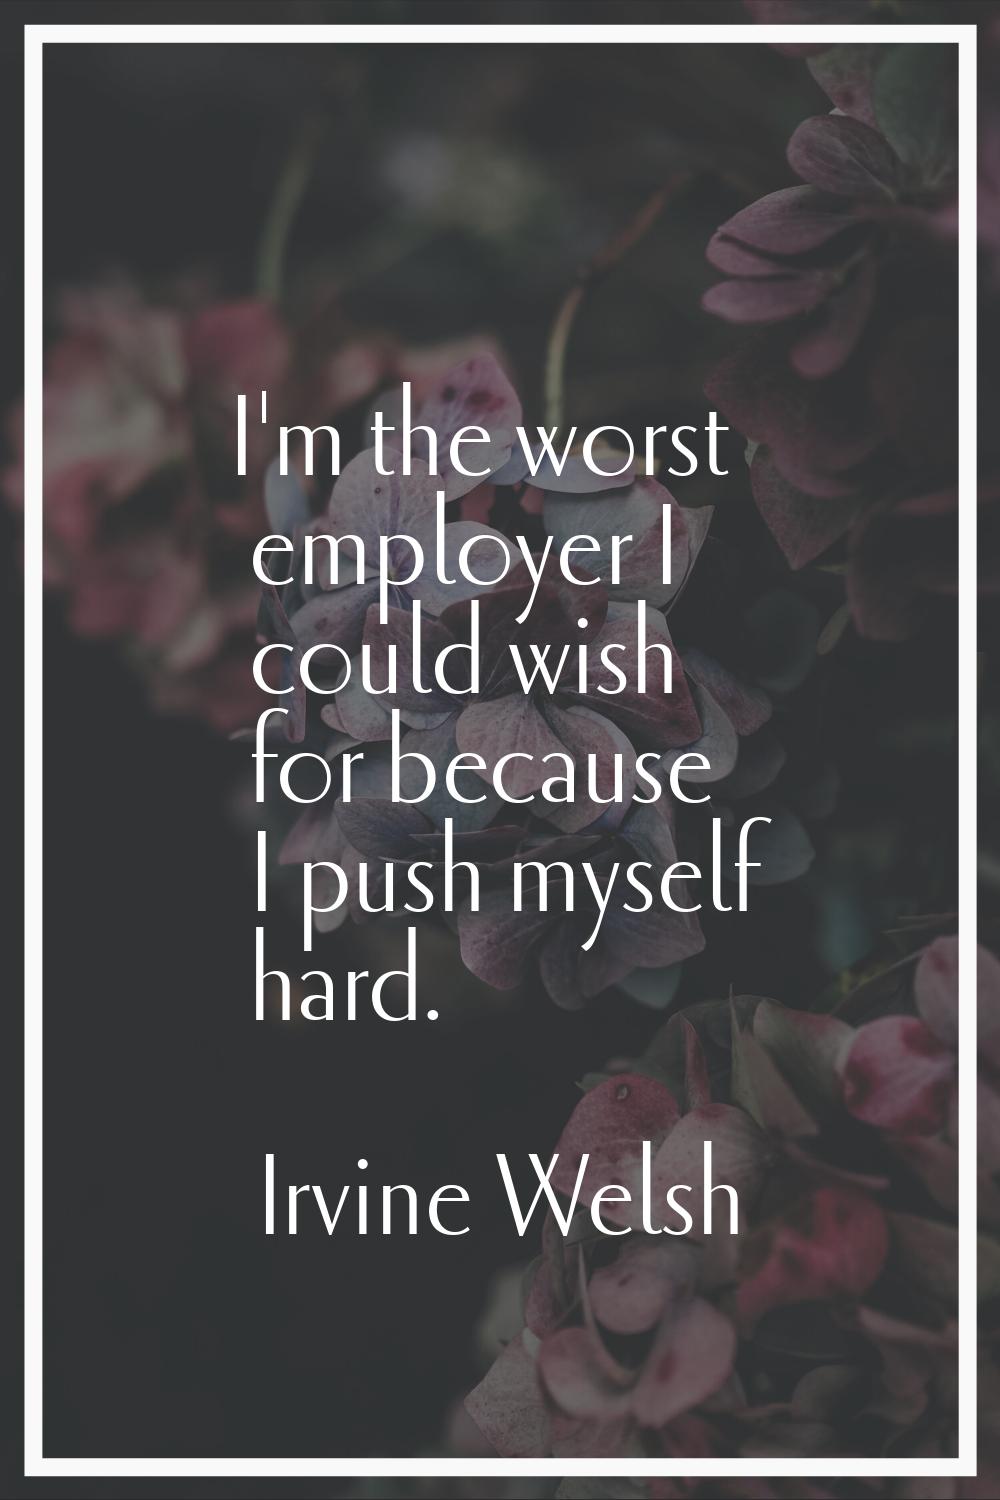 I'm the worst employer I could wish for because I push myself hard.